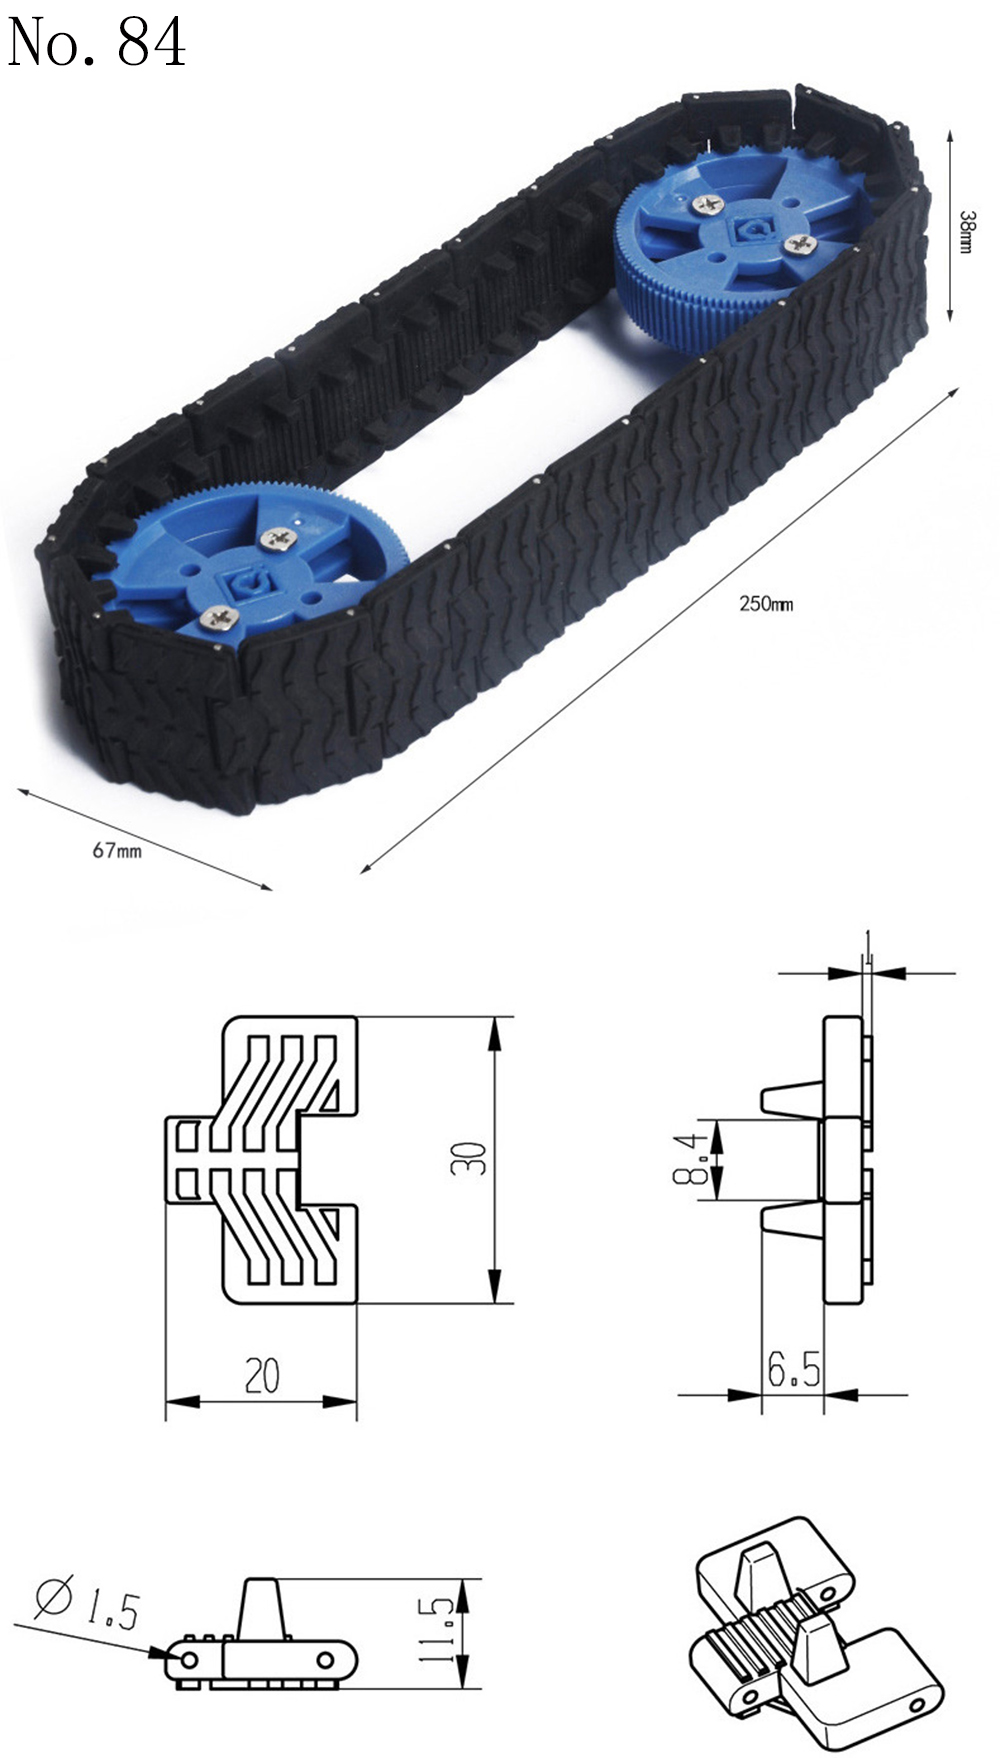 DIY-Plastic-RC-Tank-Crawler-Belt-Track-RC-Robot-Part-1390392-6